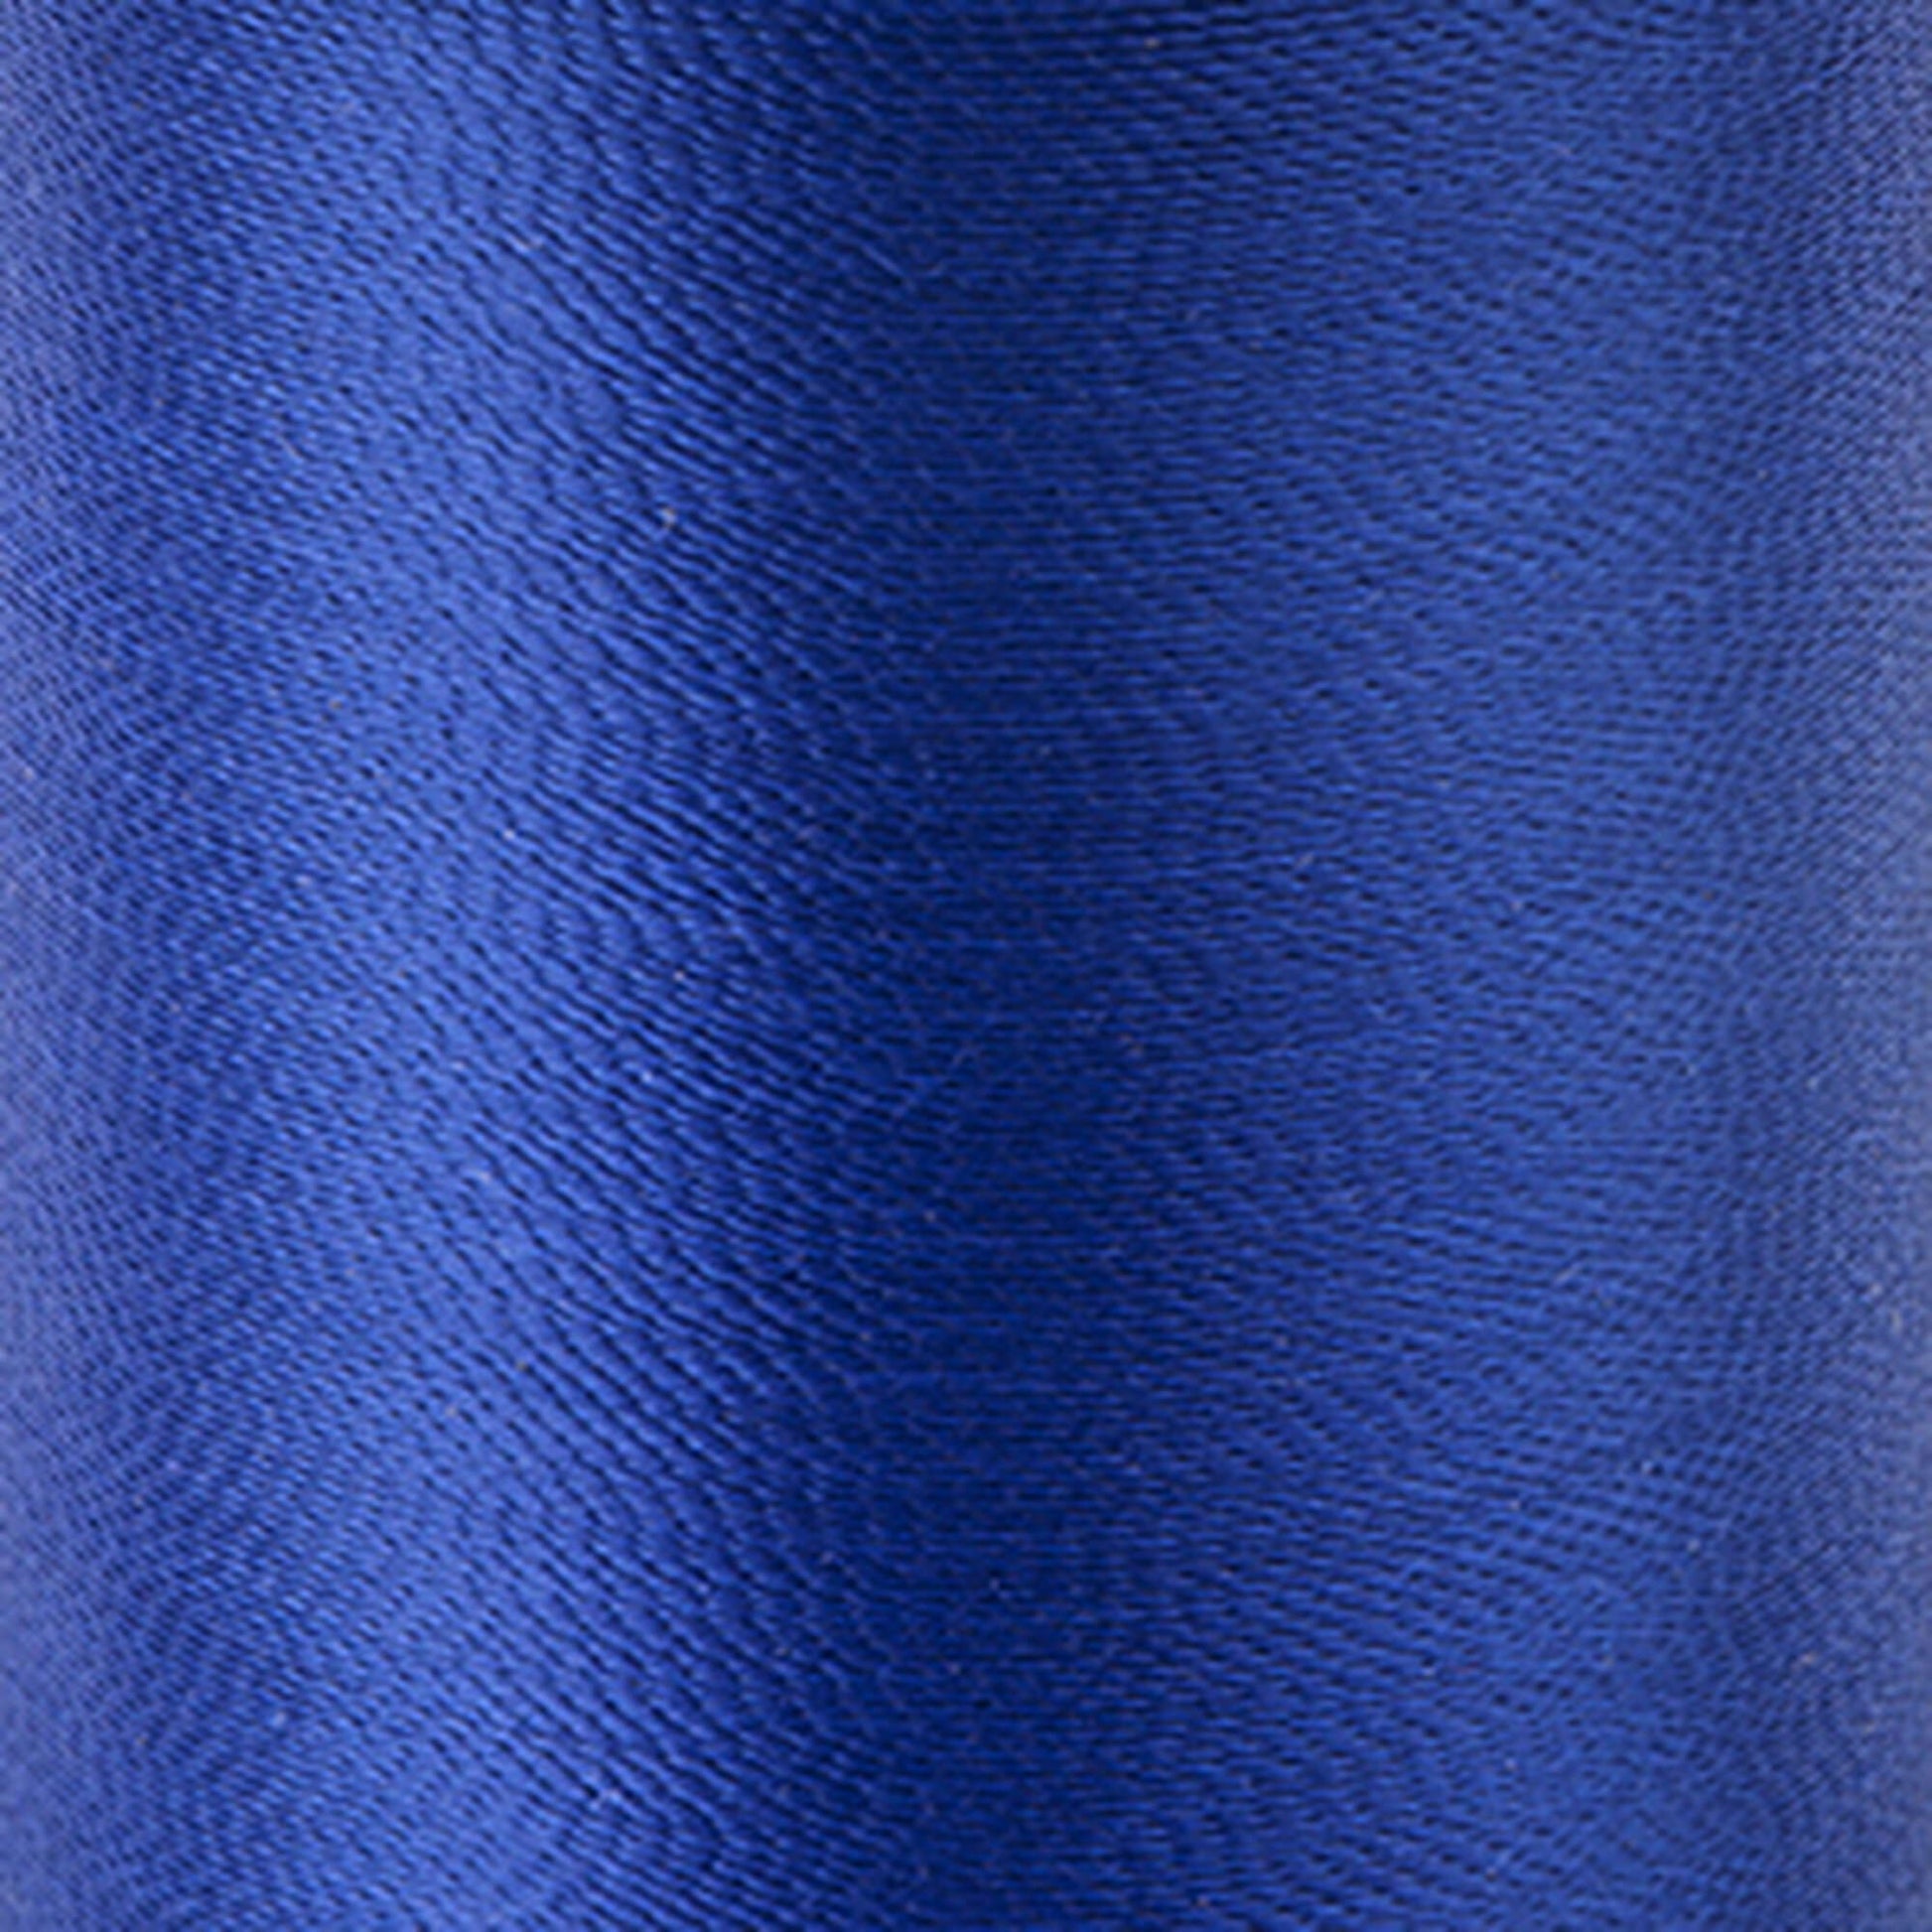 Coats & Clark Eloflex Stretchable Thread (225 Yards)